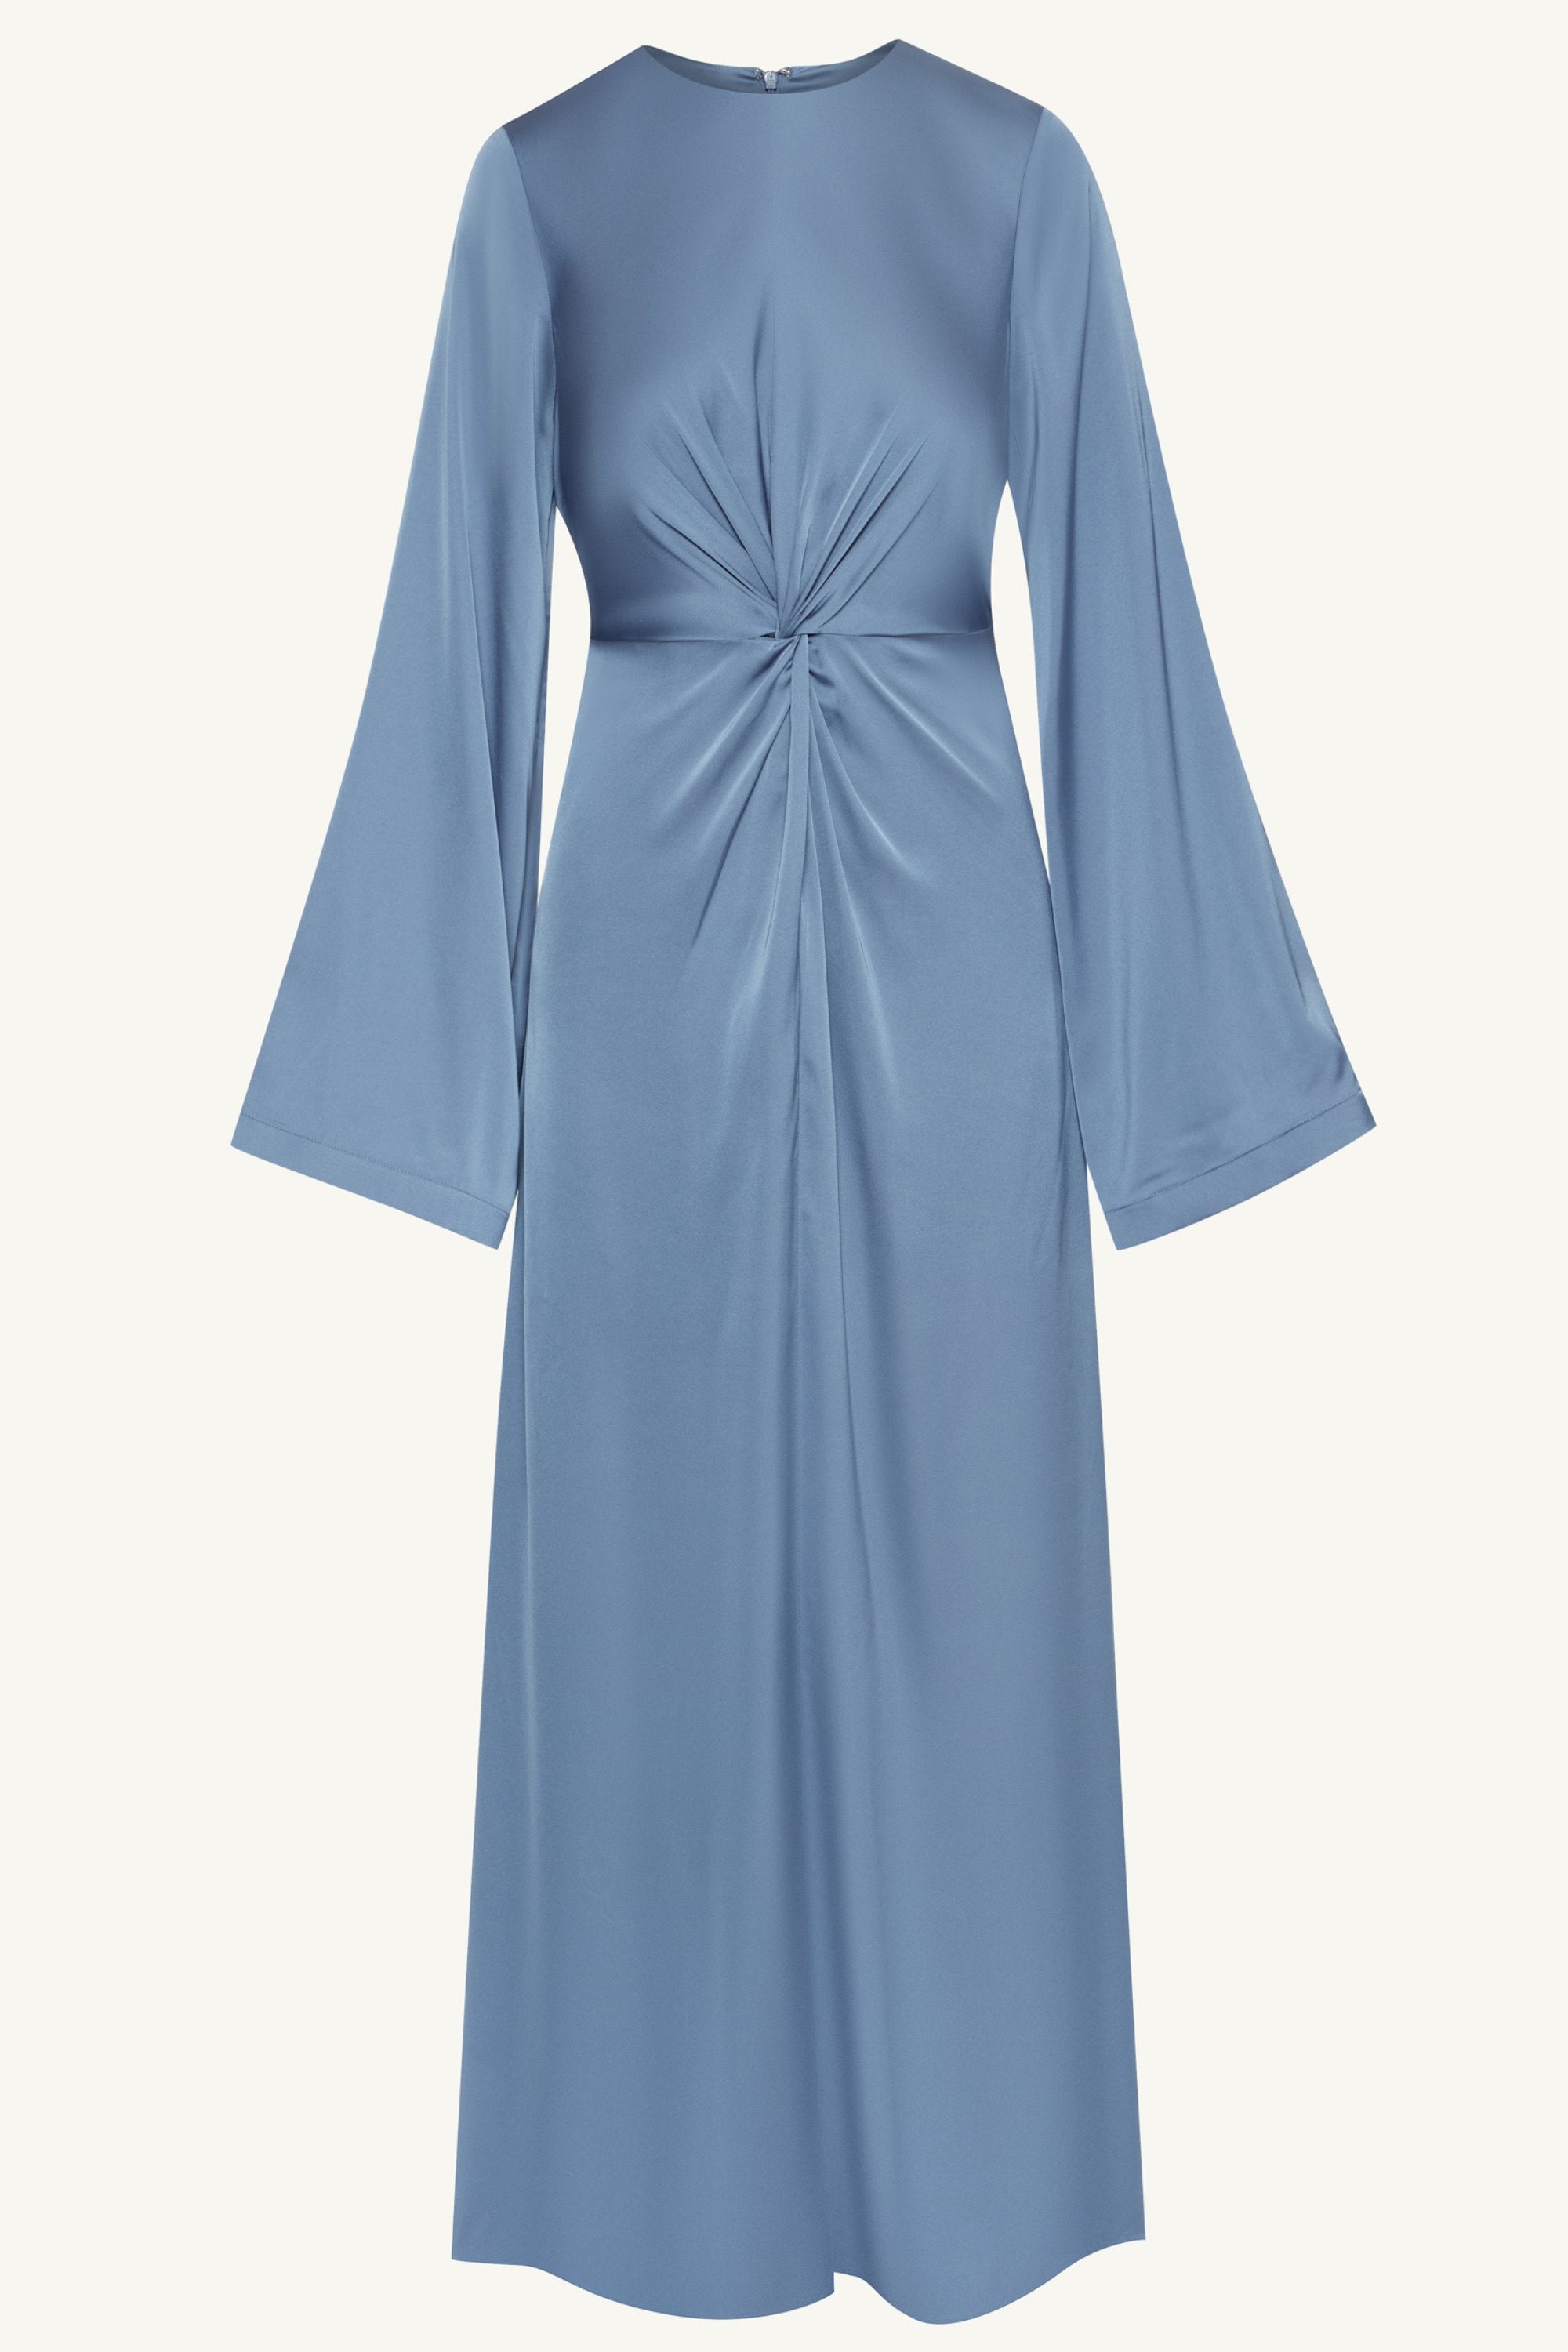 Duha Satin Twist Front Maxi Dress - Dusty Blue Clothing epschoolboard 